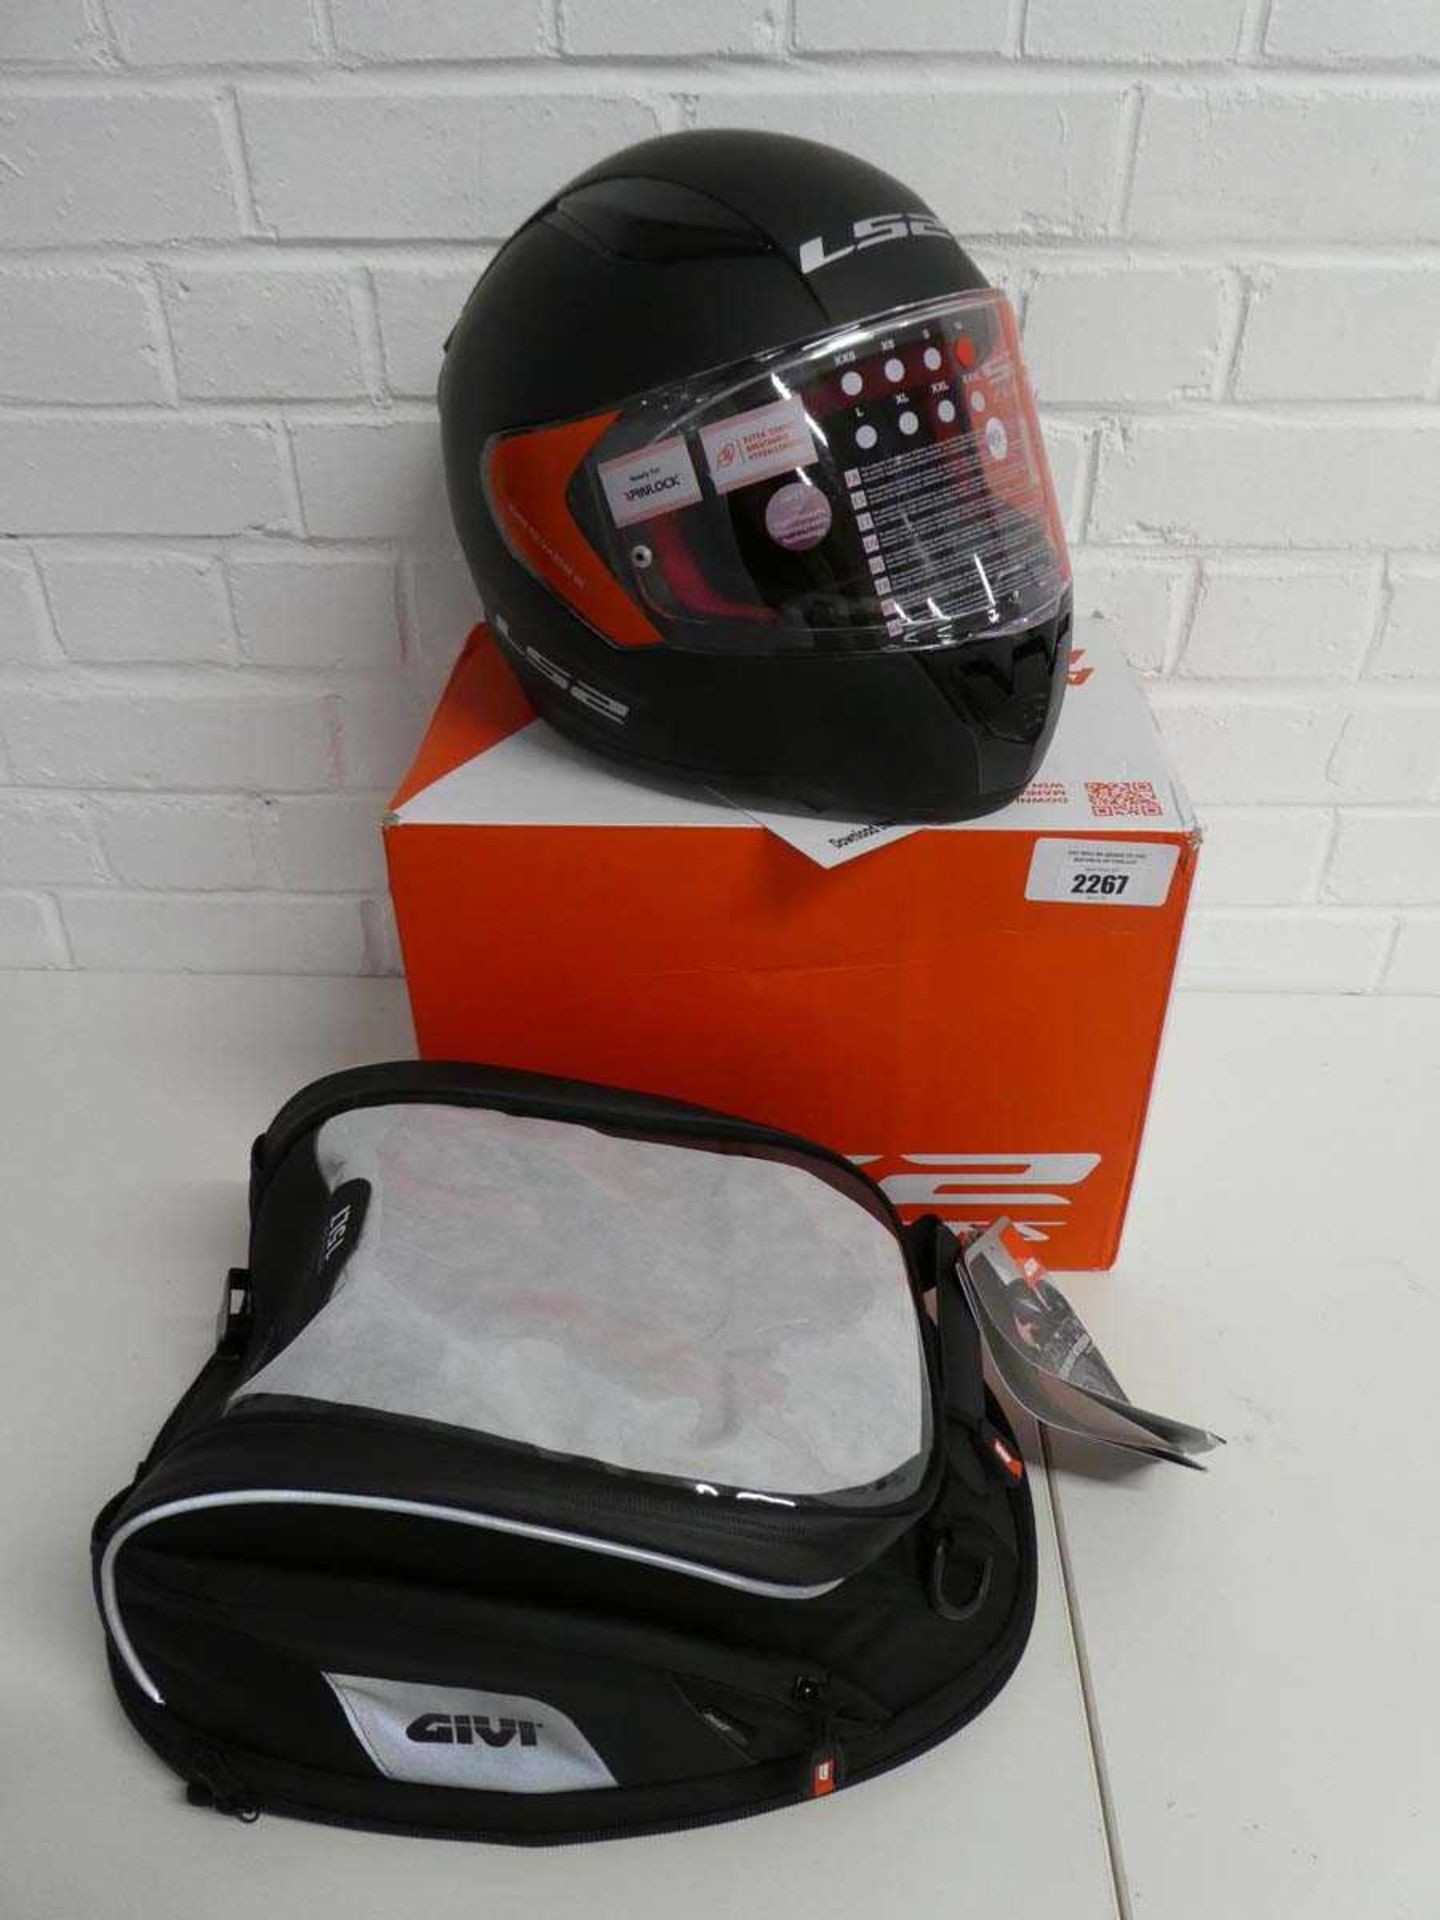 +VAT LS2 FF353 Rapid Single matt black motorcycle helmet size: M, together with a Givi motorcycle